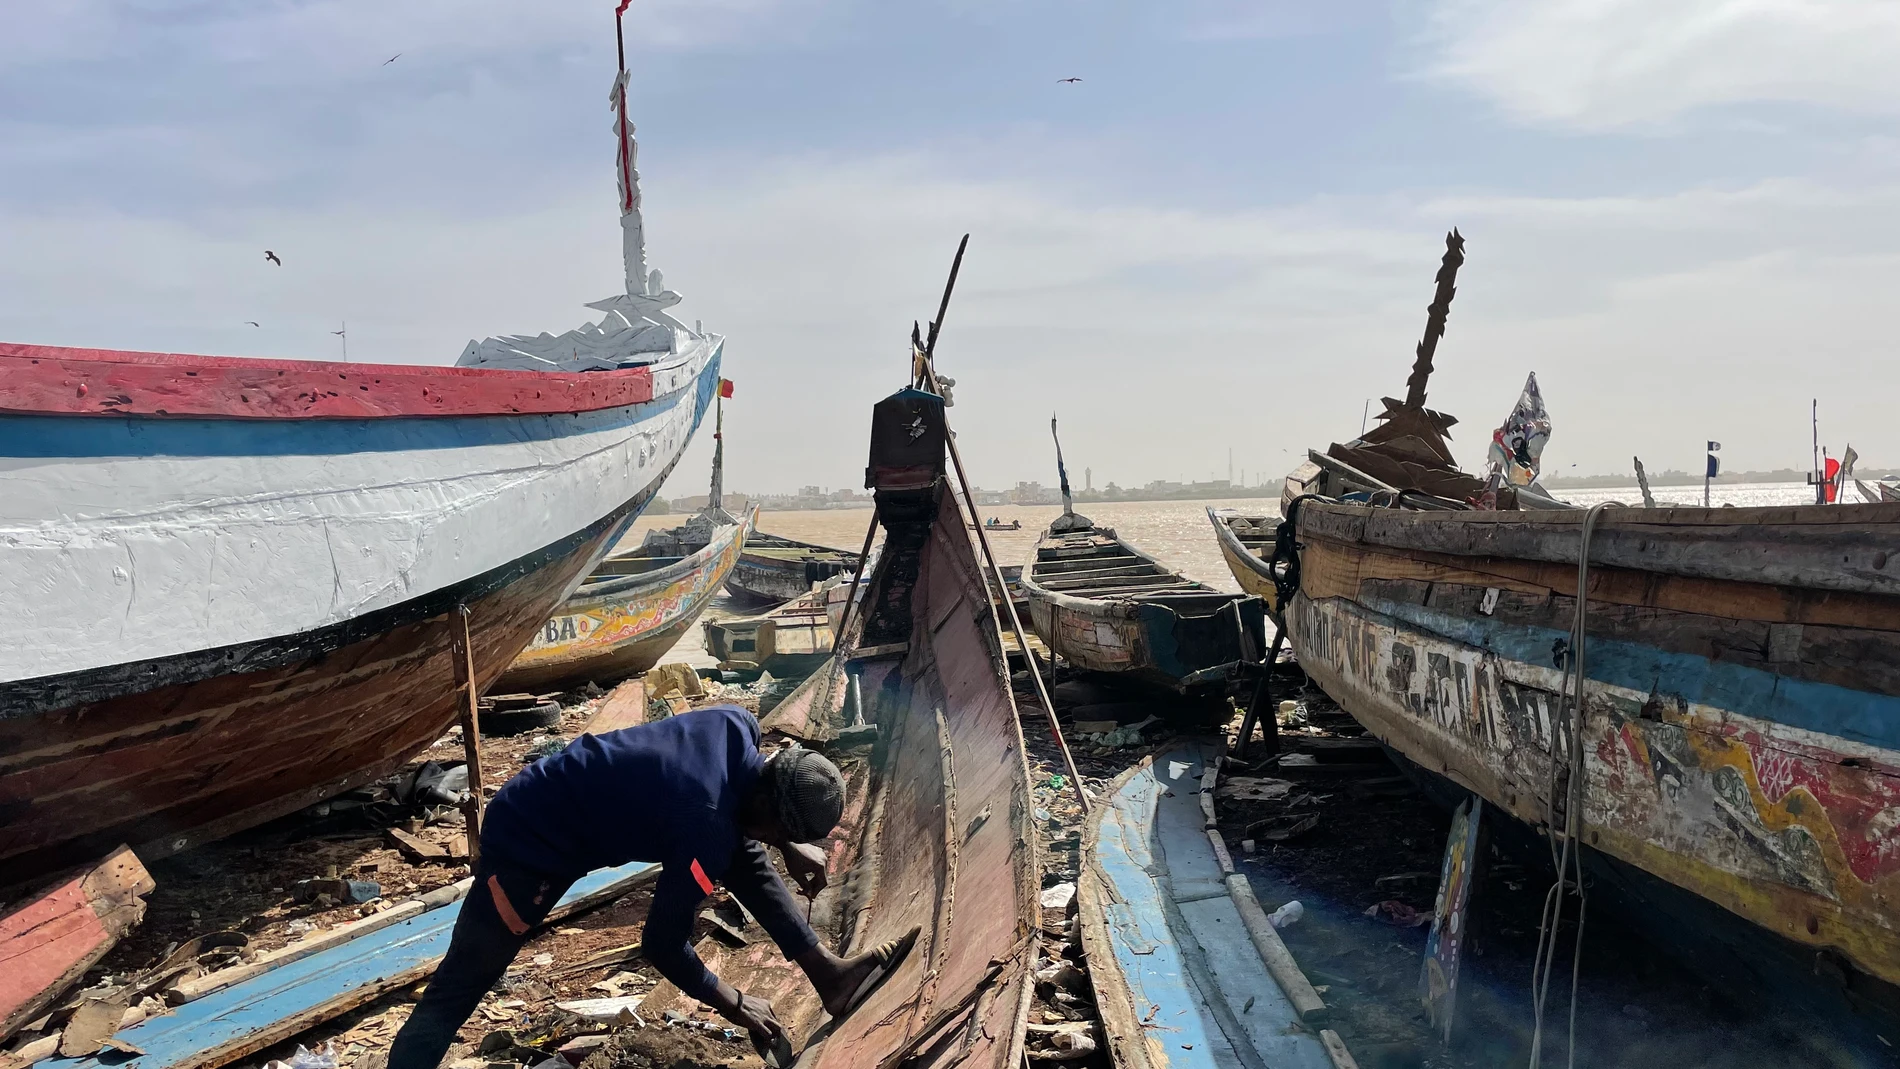 Puerto de pescadores en Saint Louis, Senegal.